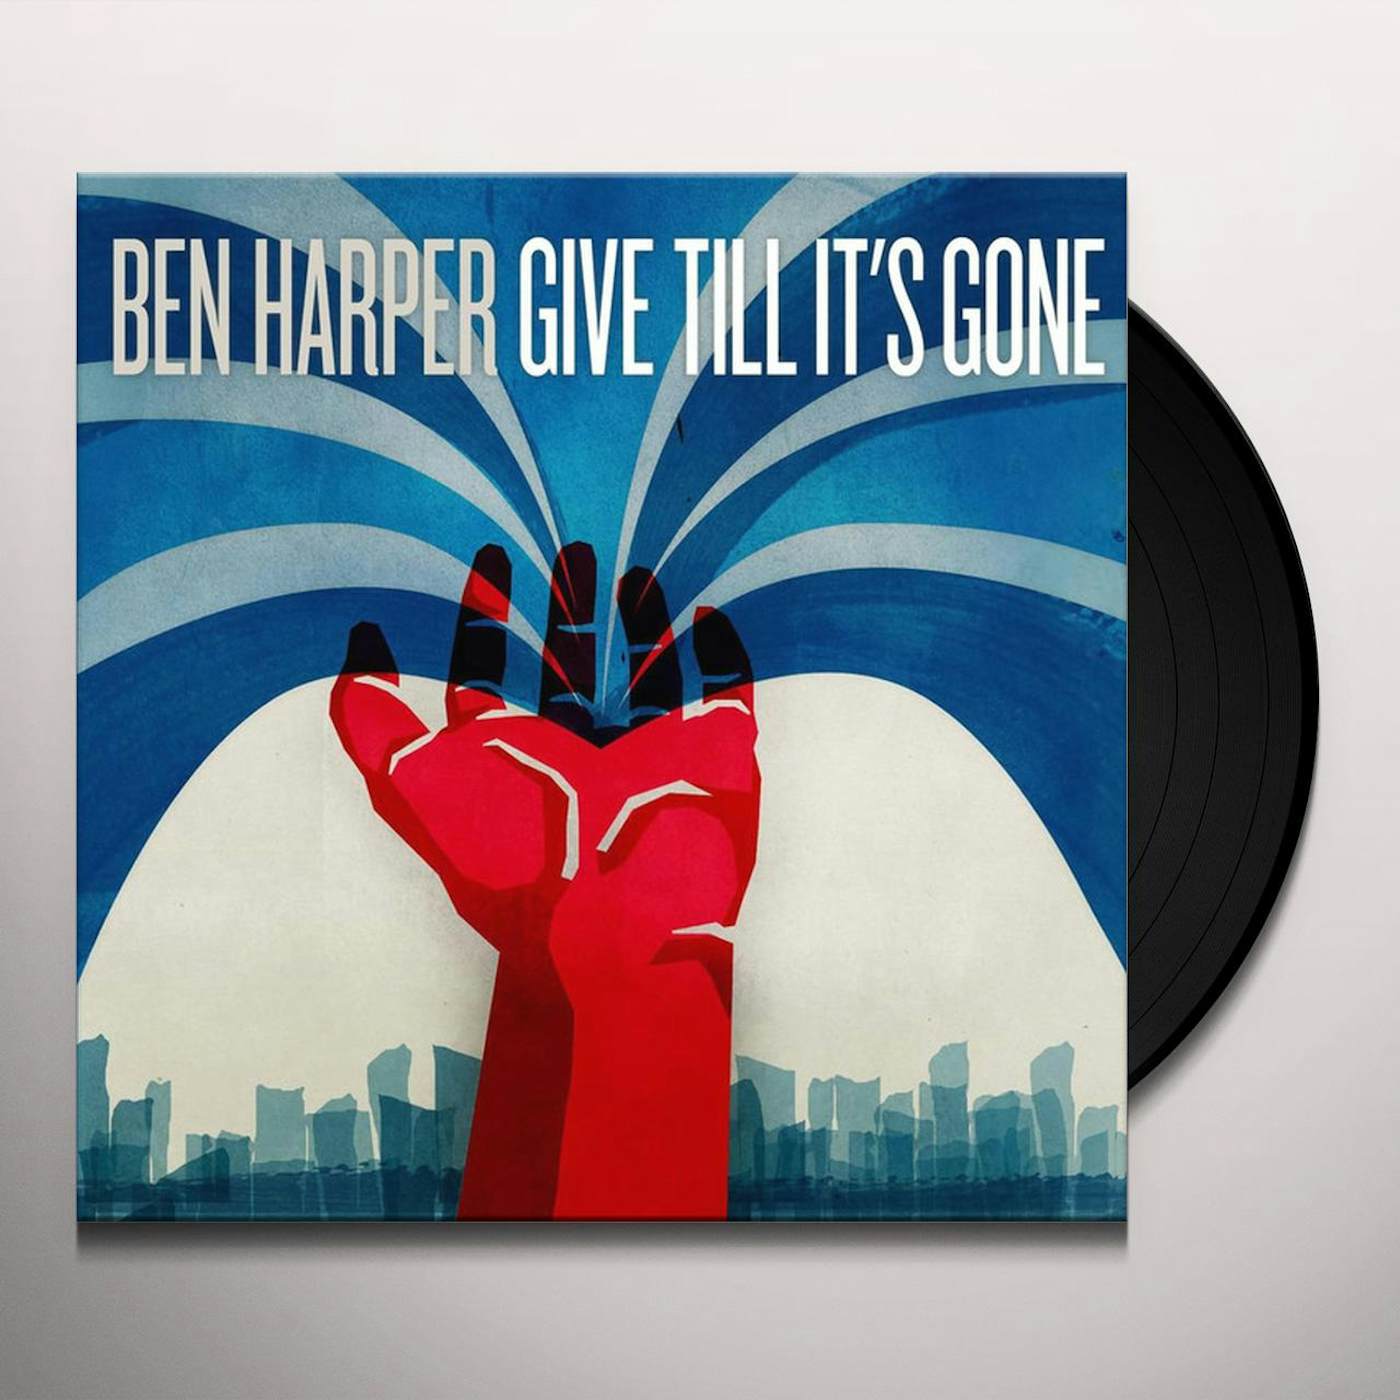 Ben Harper Give Till It's Gone Vinyl Record